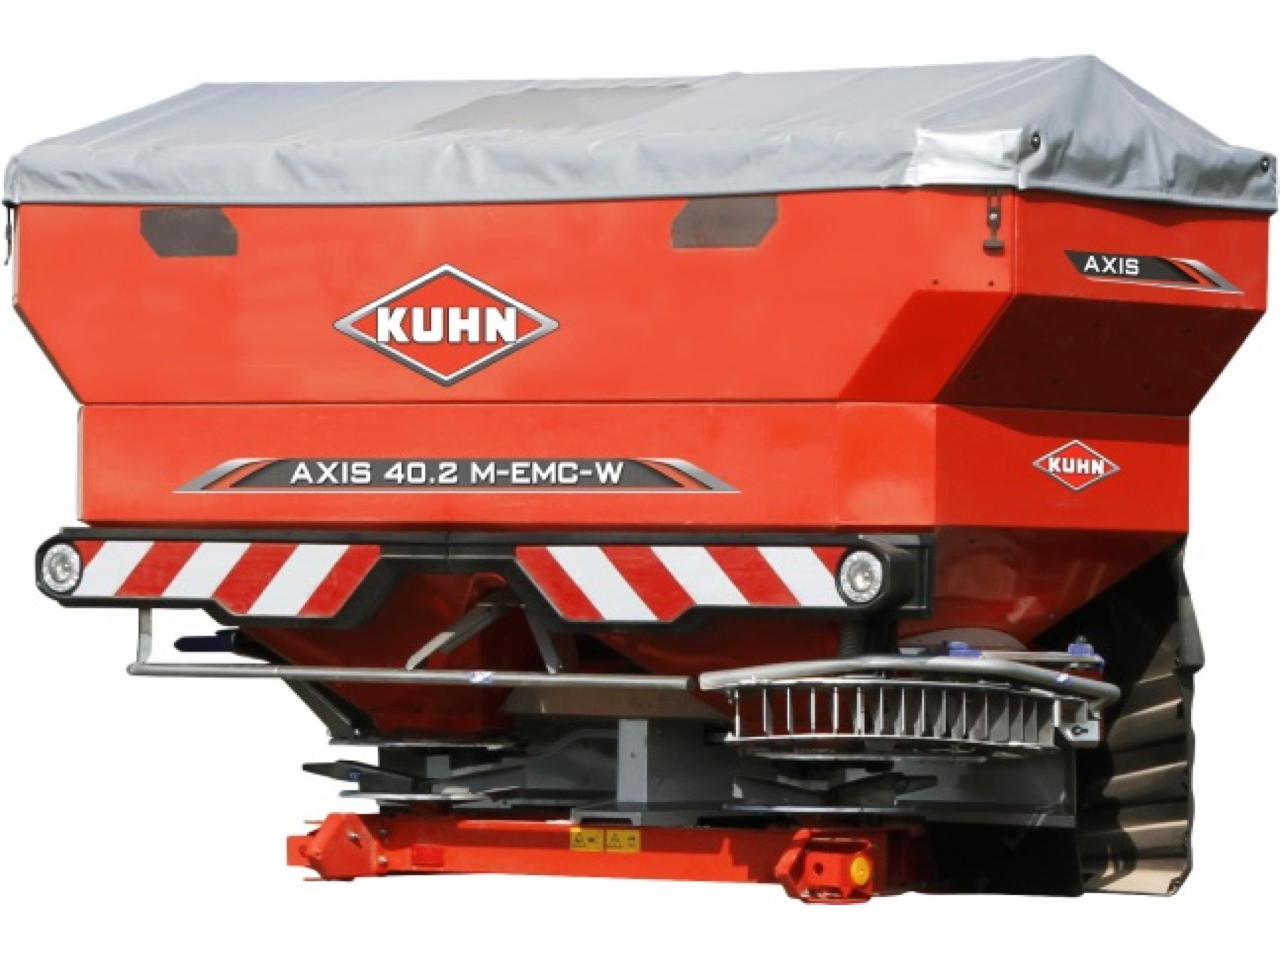 Kuhn Axis 20.2 M-EMC W